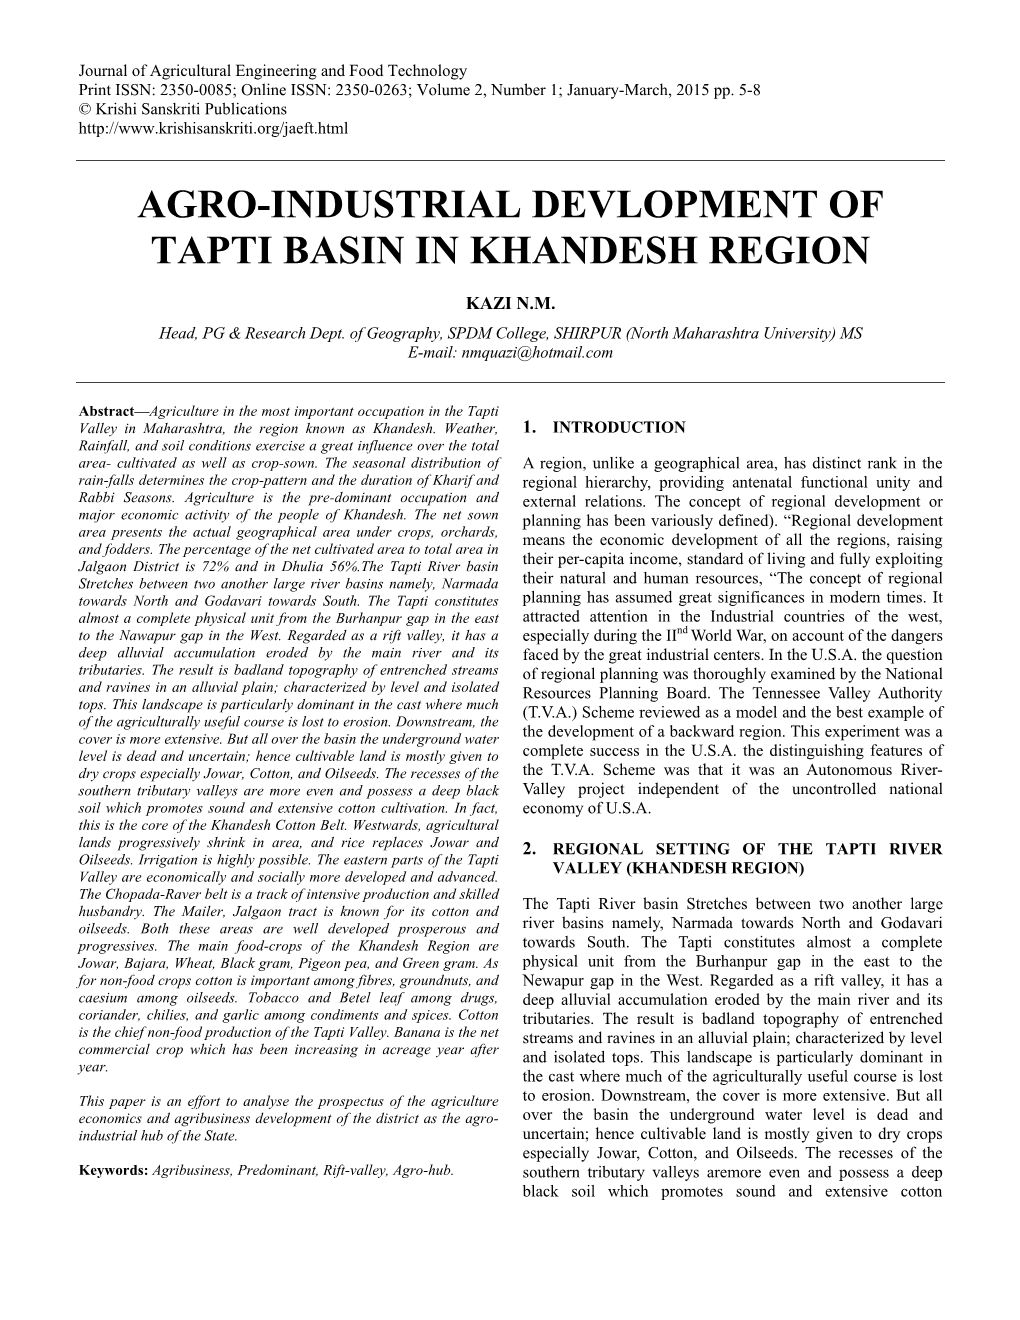 Agro-Industrial Devlopment of Tapti Basin in Khandesh Region